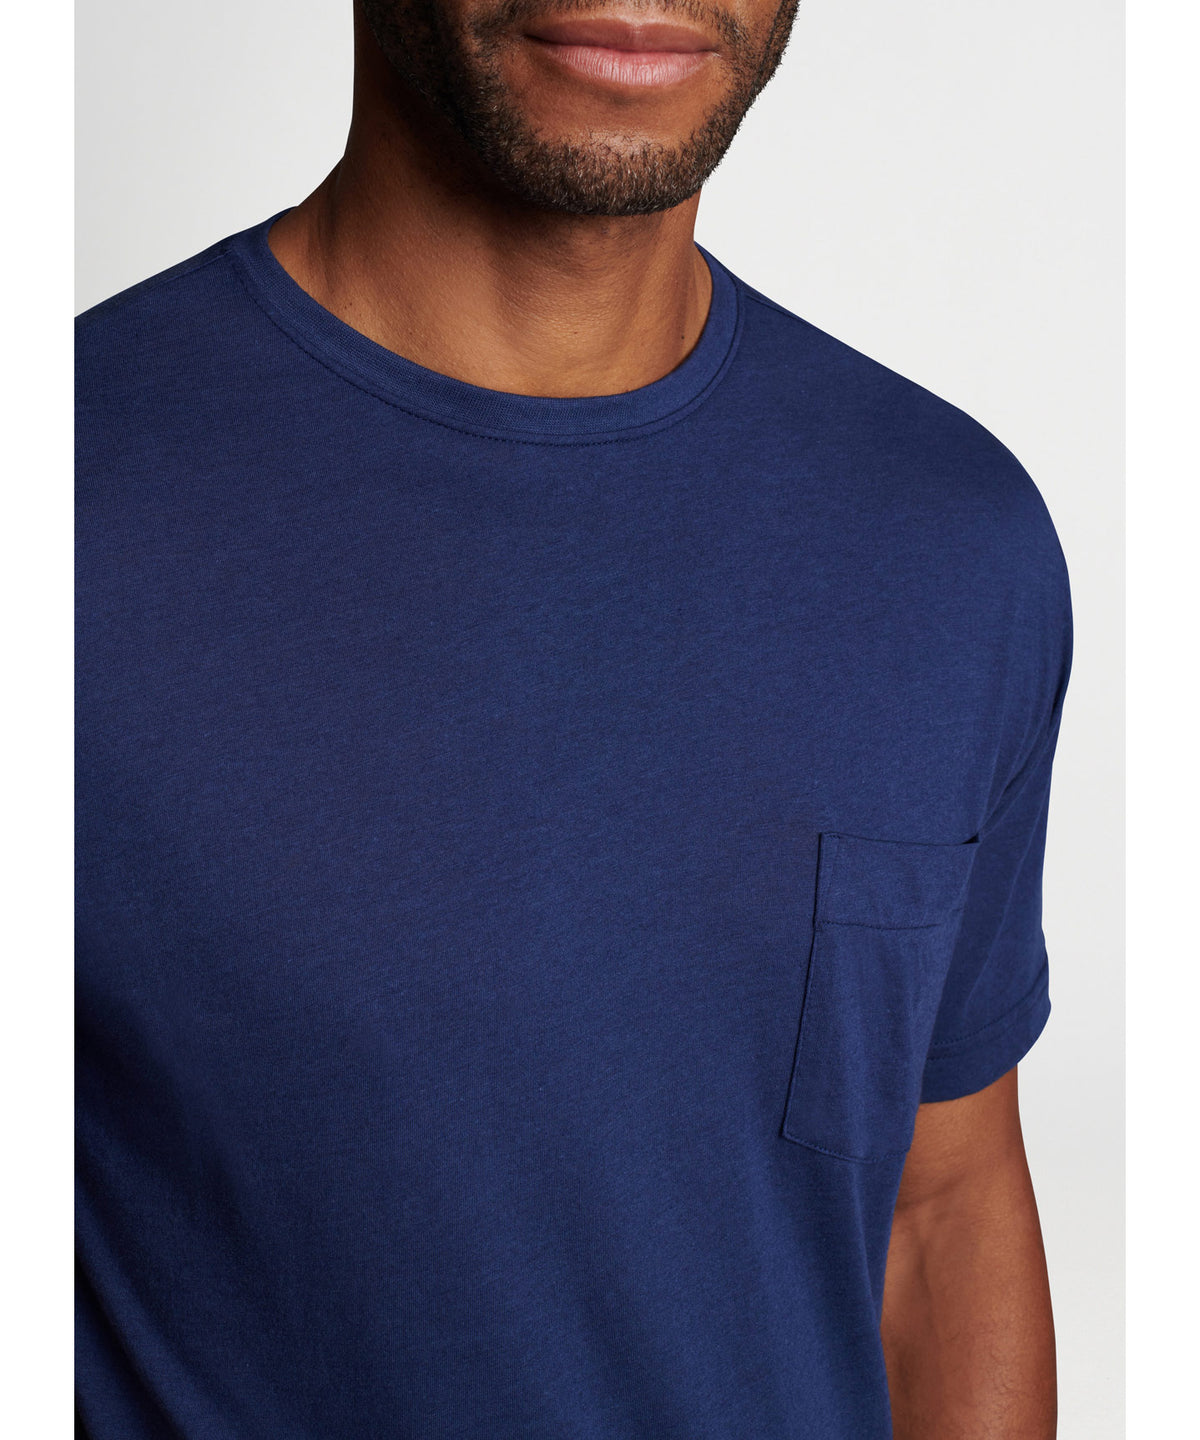 Peter Millar Seaside Pocket T-Shirt, Men's Big & Tall